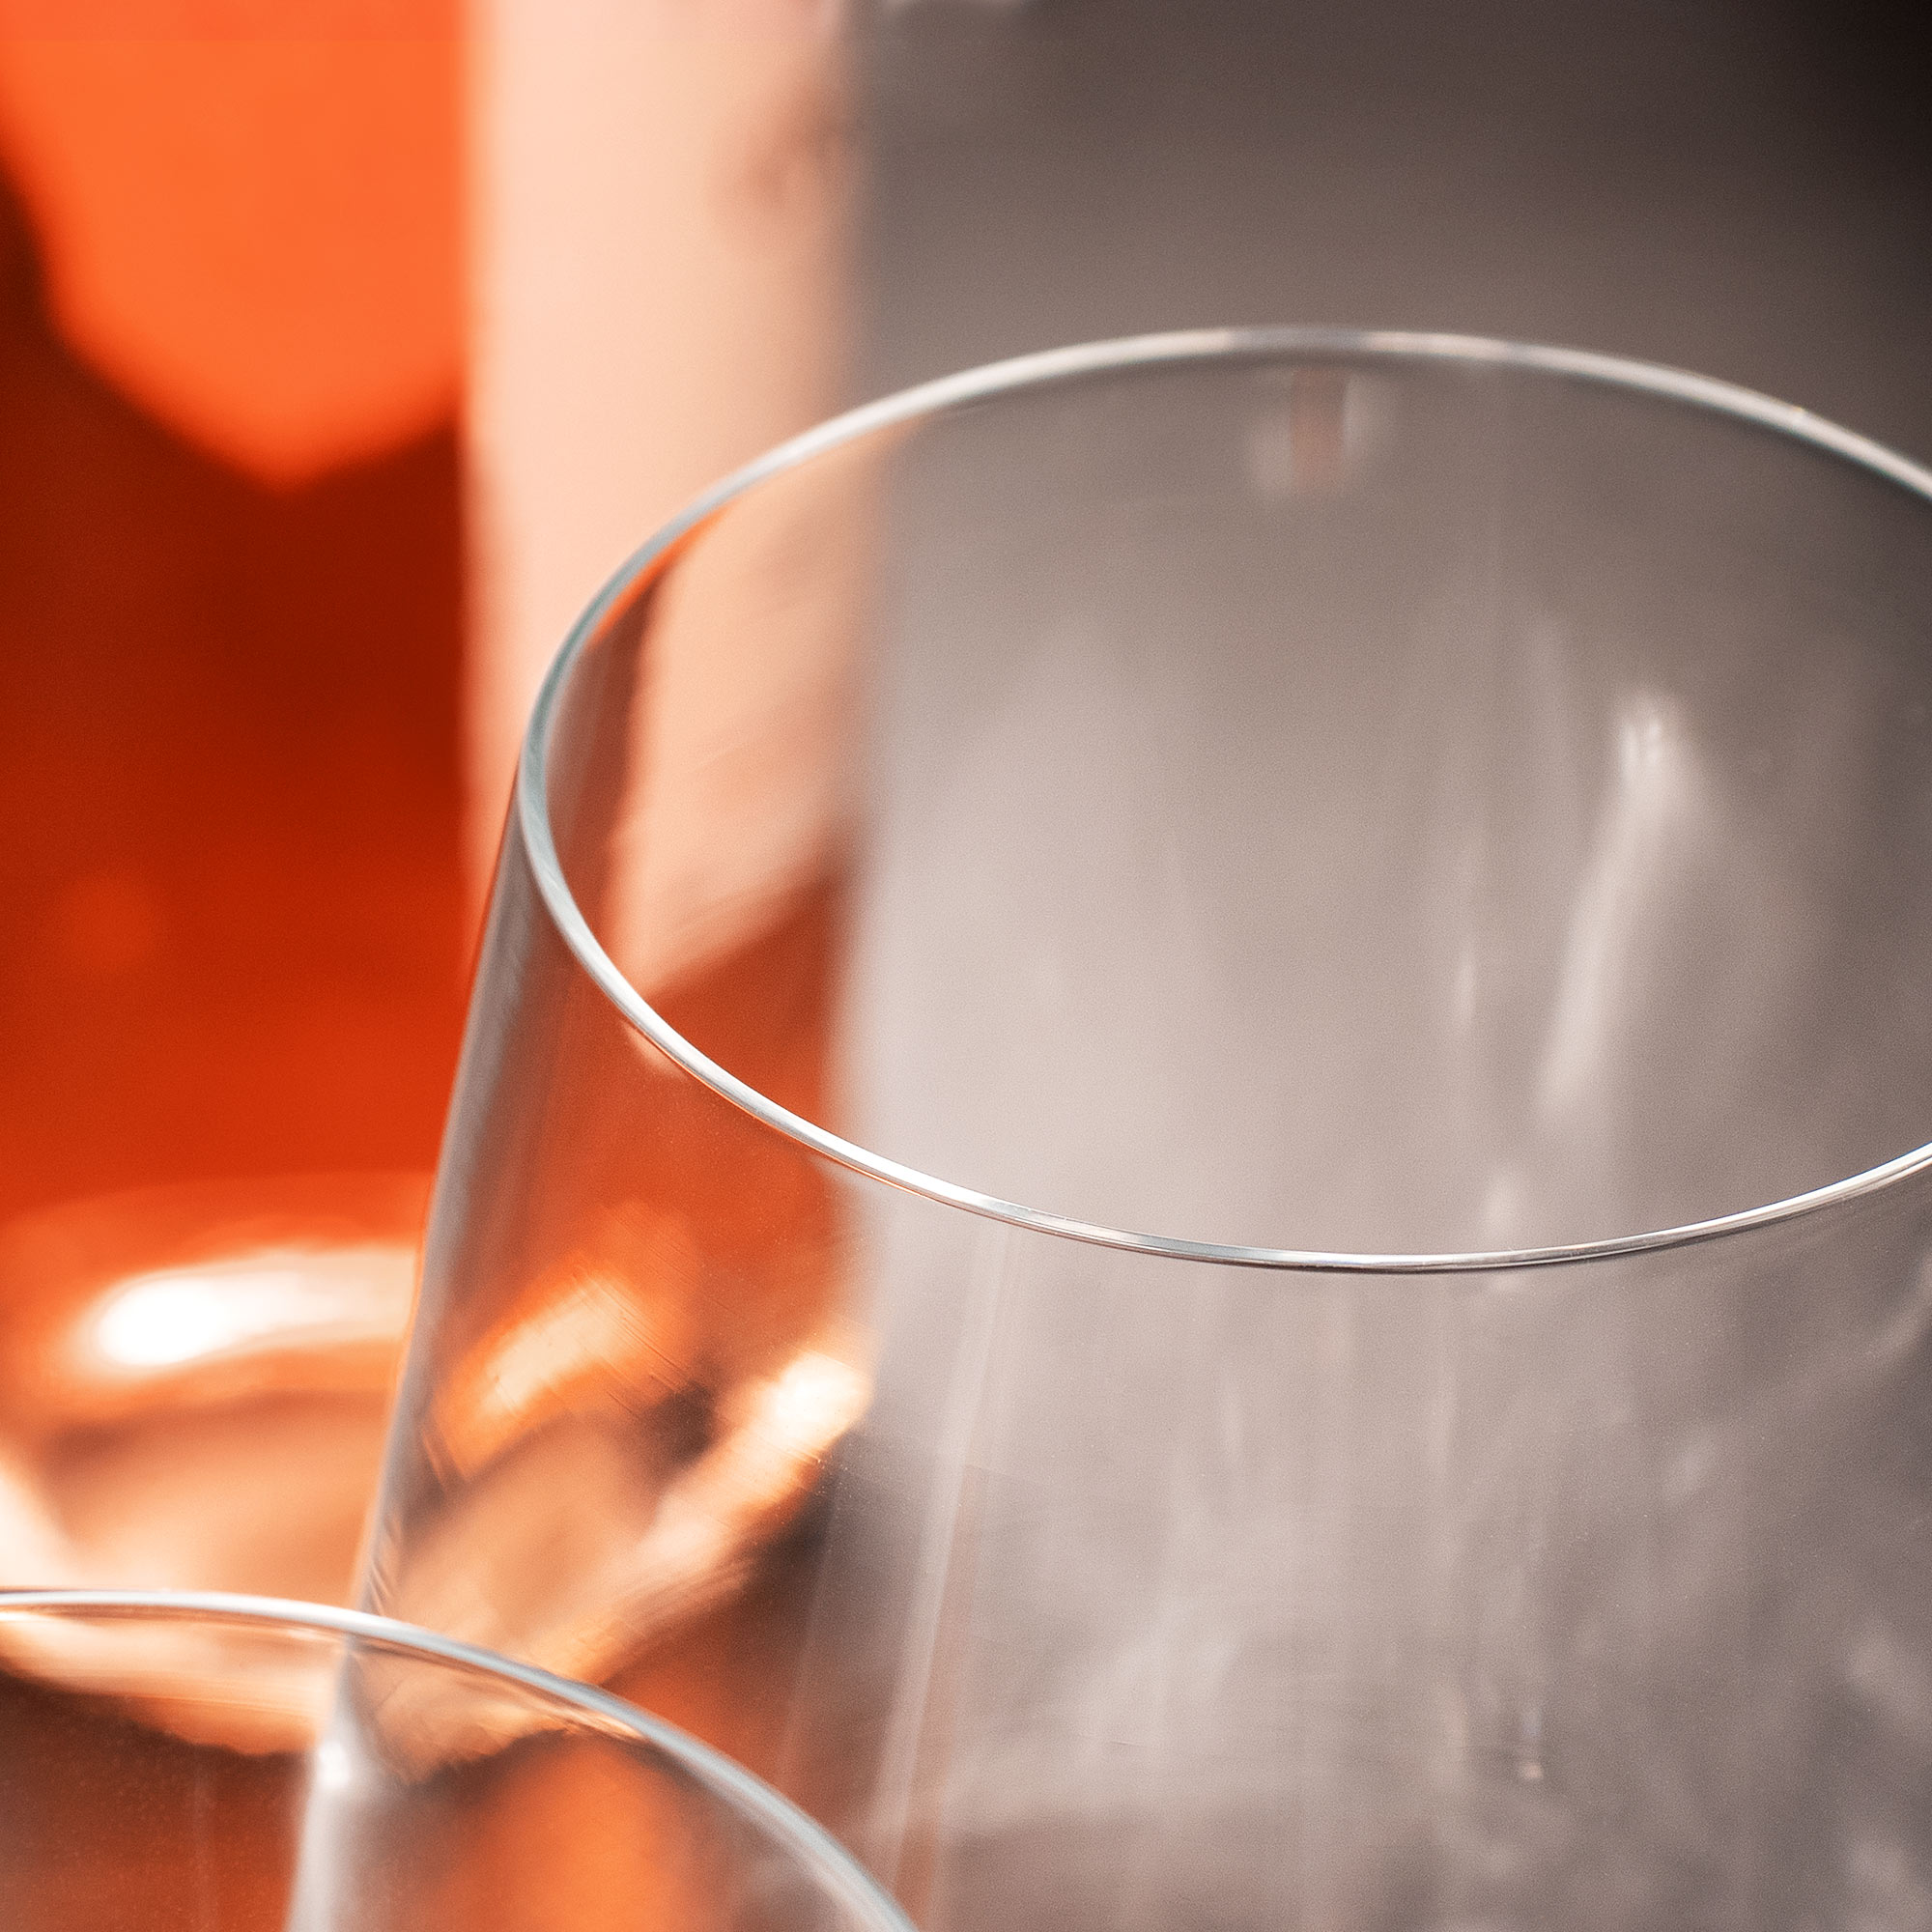 Weinglas mit Gravur Royal - Rotweinglas